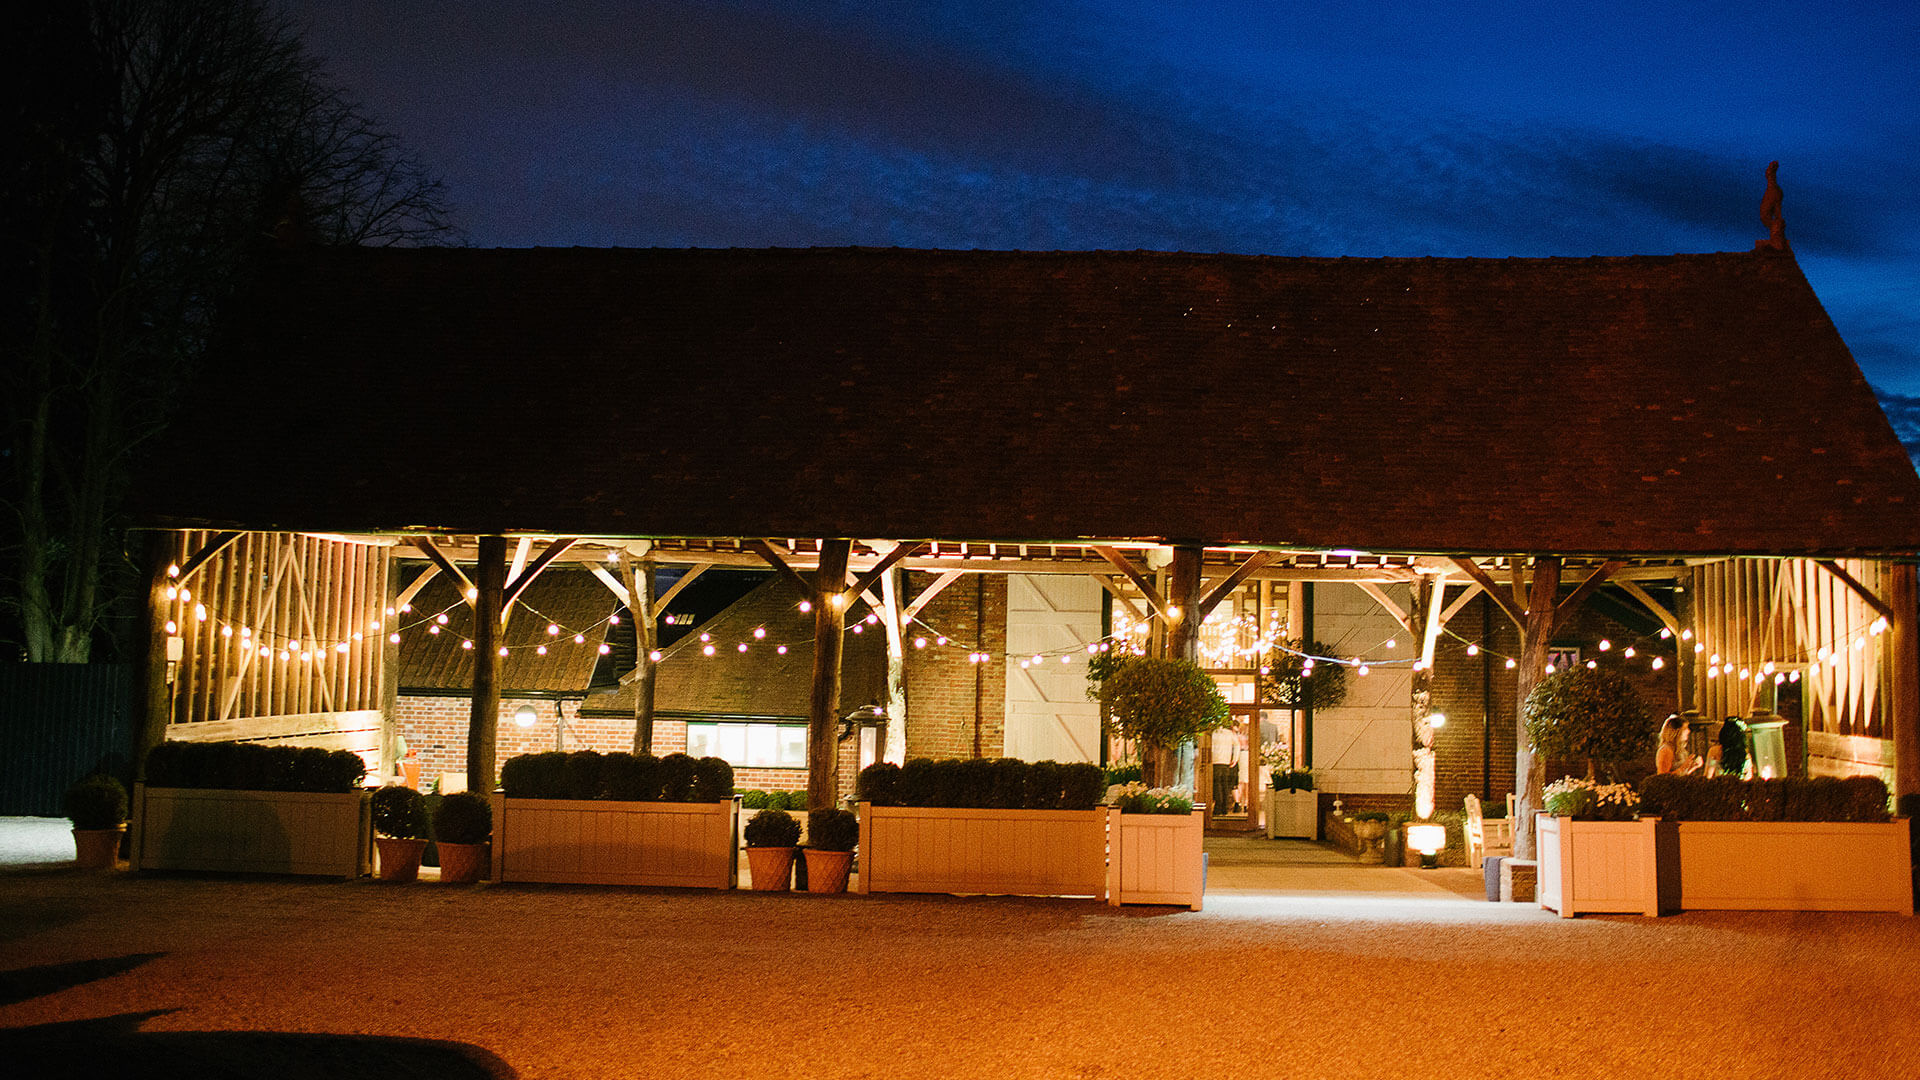 The Gather Barn looks romantic at night lit up with festoon lighting - barn wedding ideas